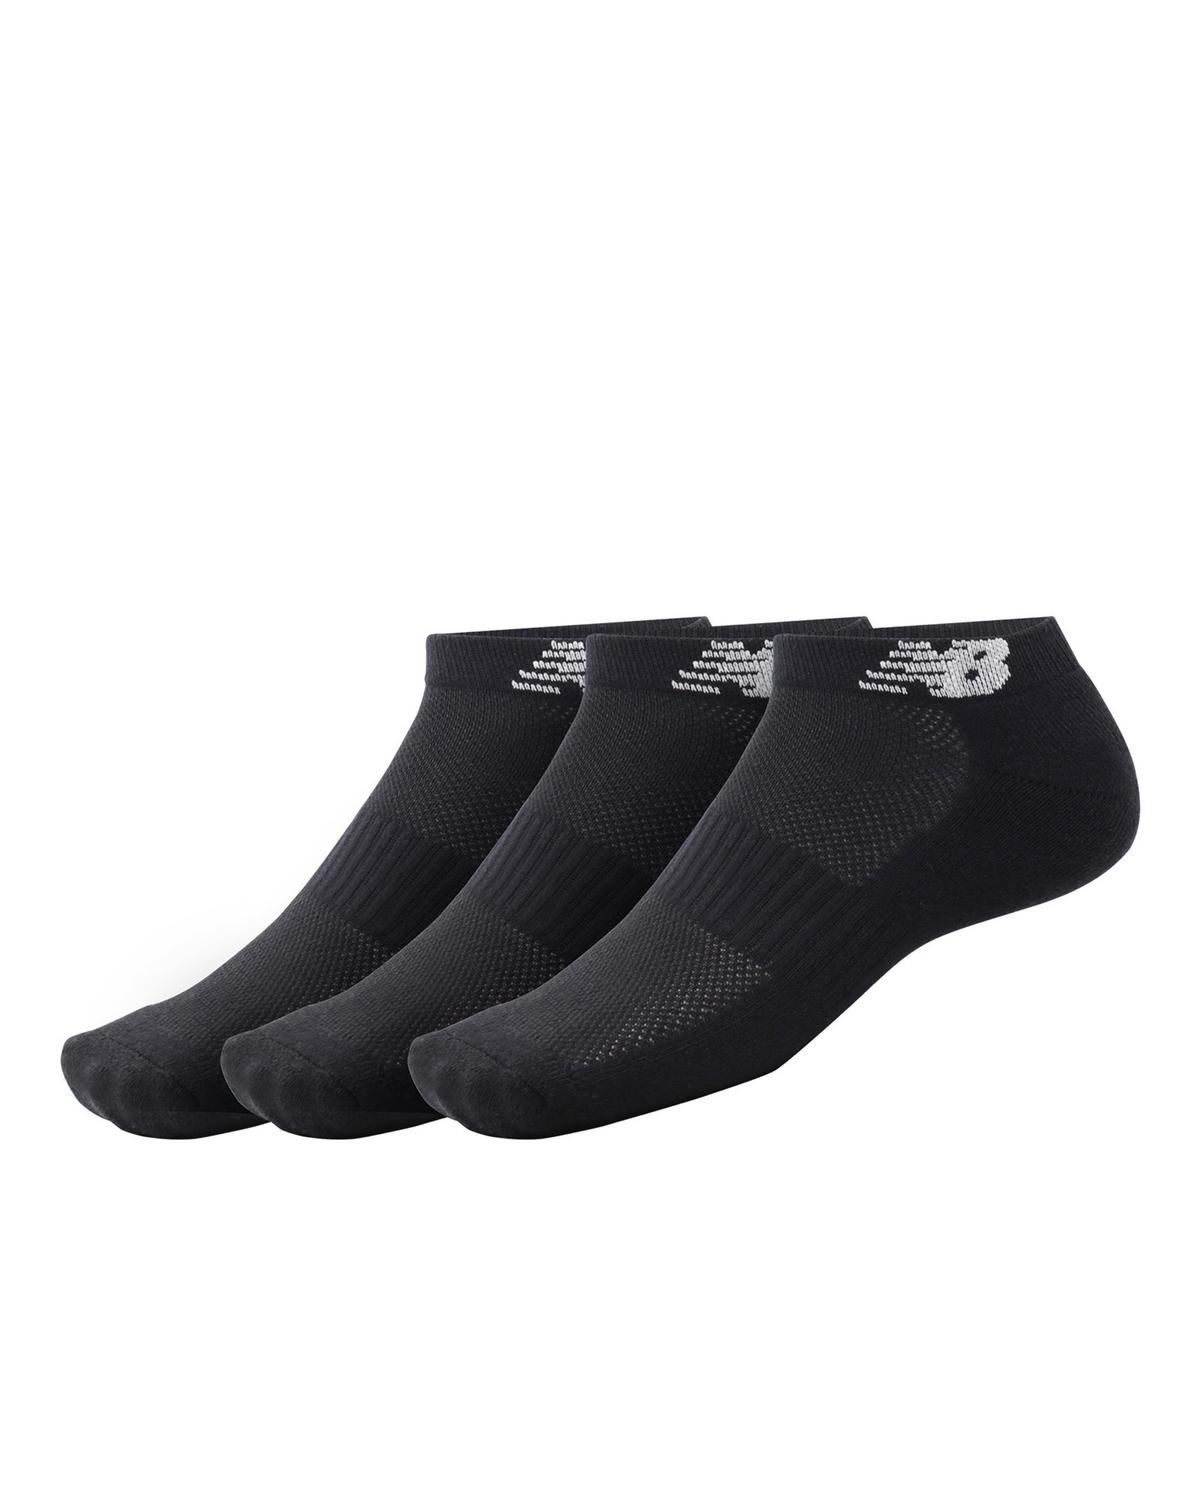 New Balance Core Cushioned No Show Socks - 3 Pack -  Black